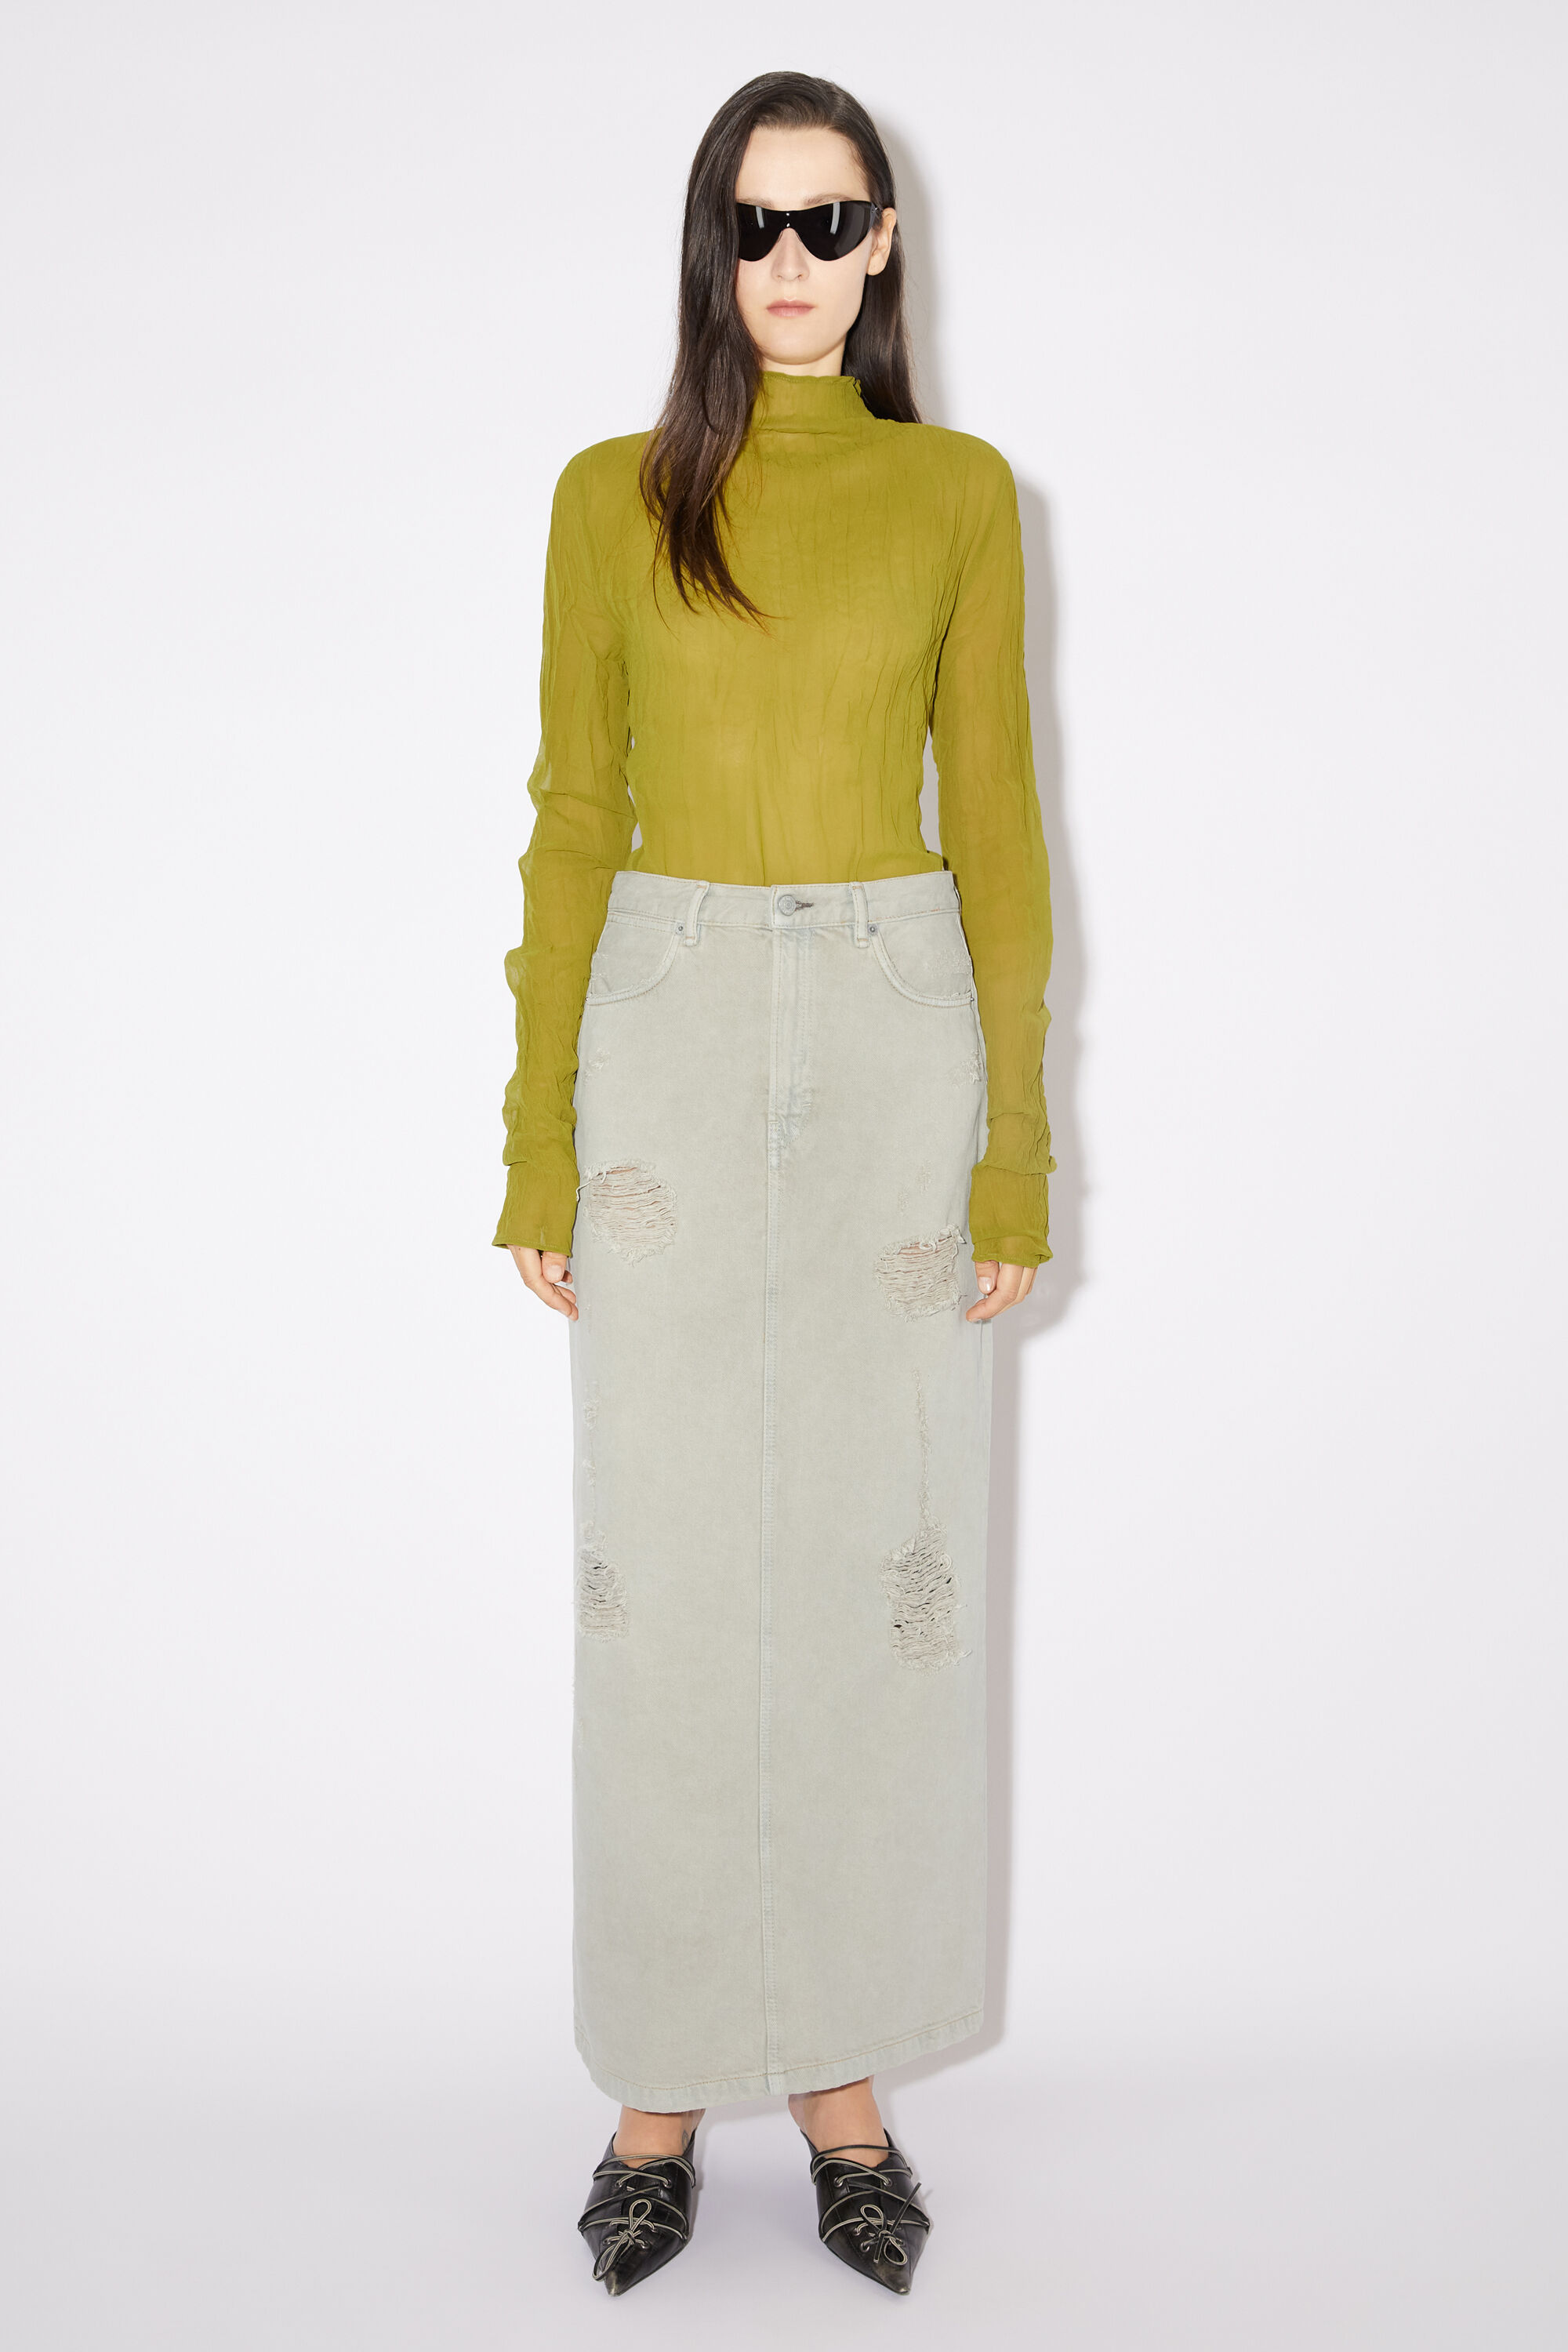 Distressed Denim Skirt in Vintage Wash #79020 – The Skirt Lady